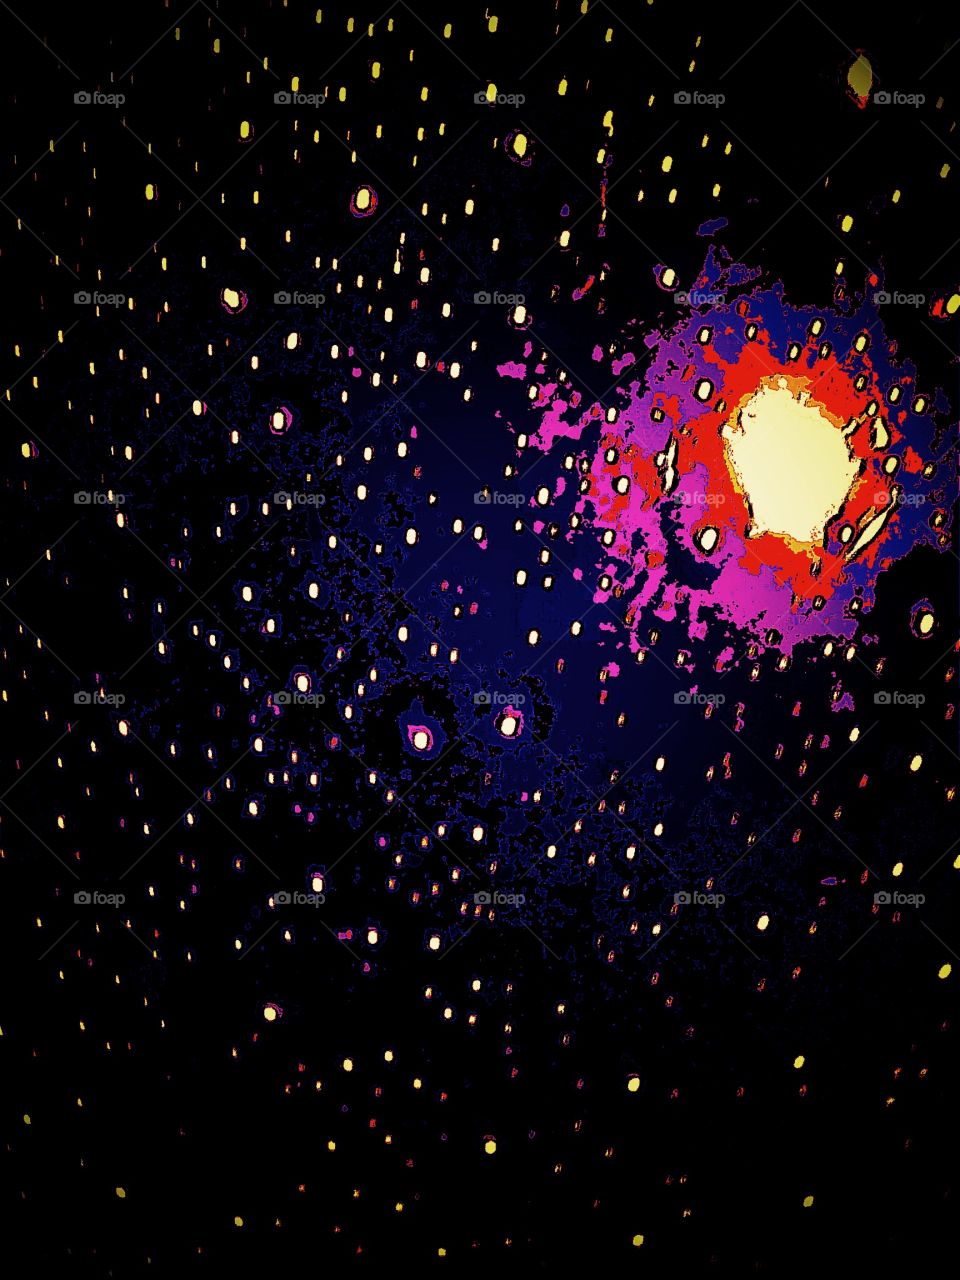 My Own Nebula